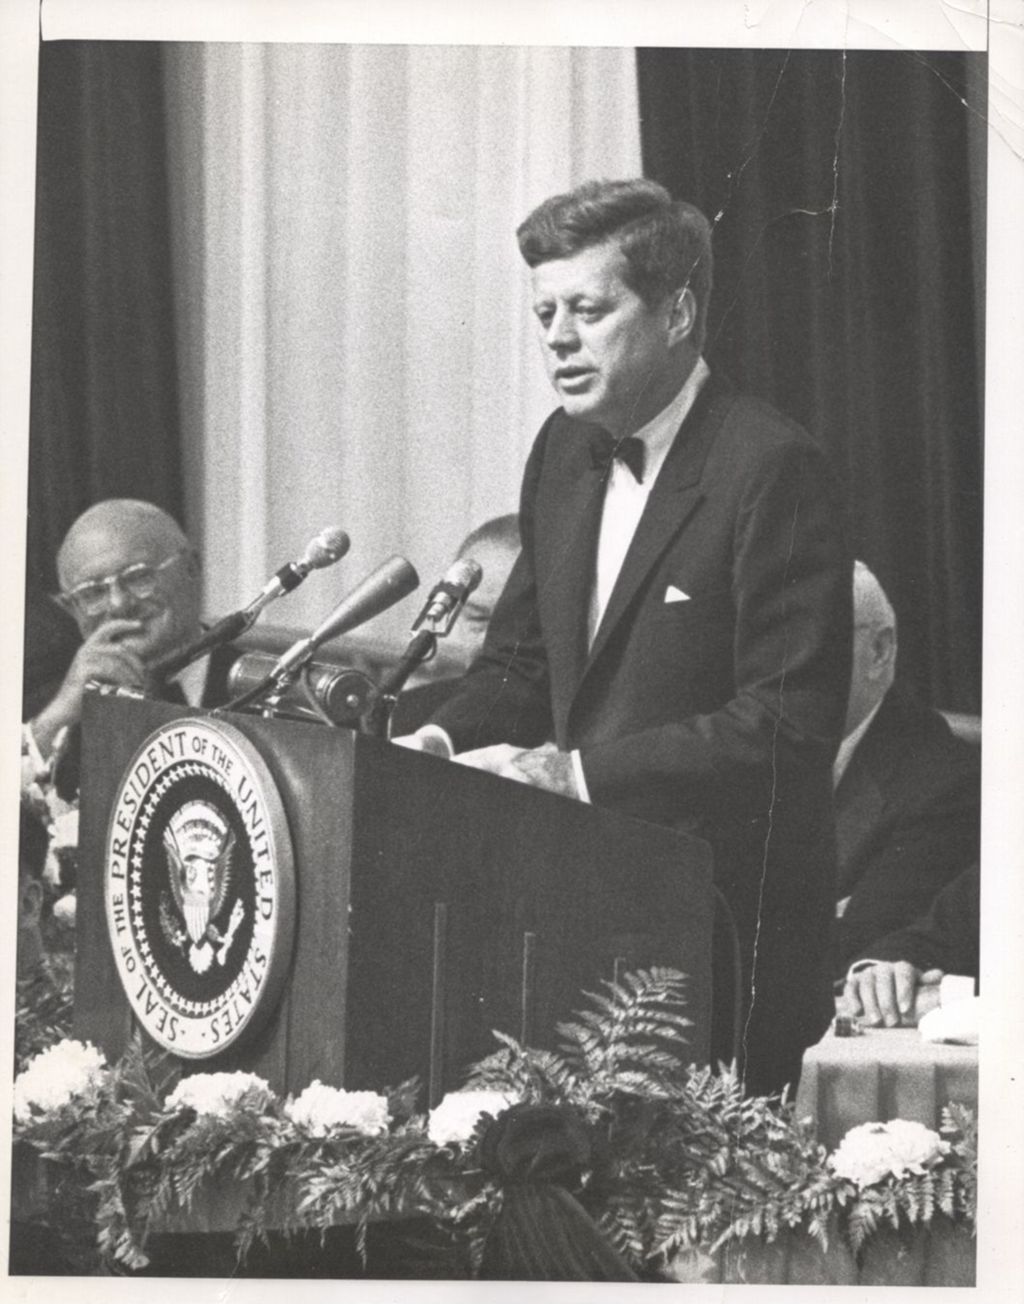 John F. Kennedy speaking at Democratic fundraising dinner